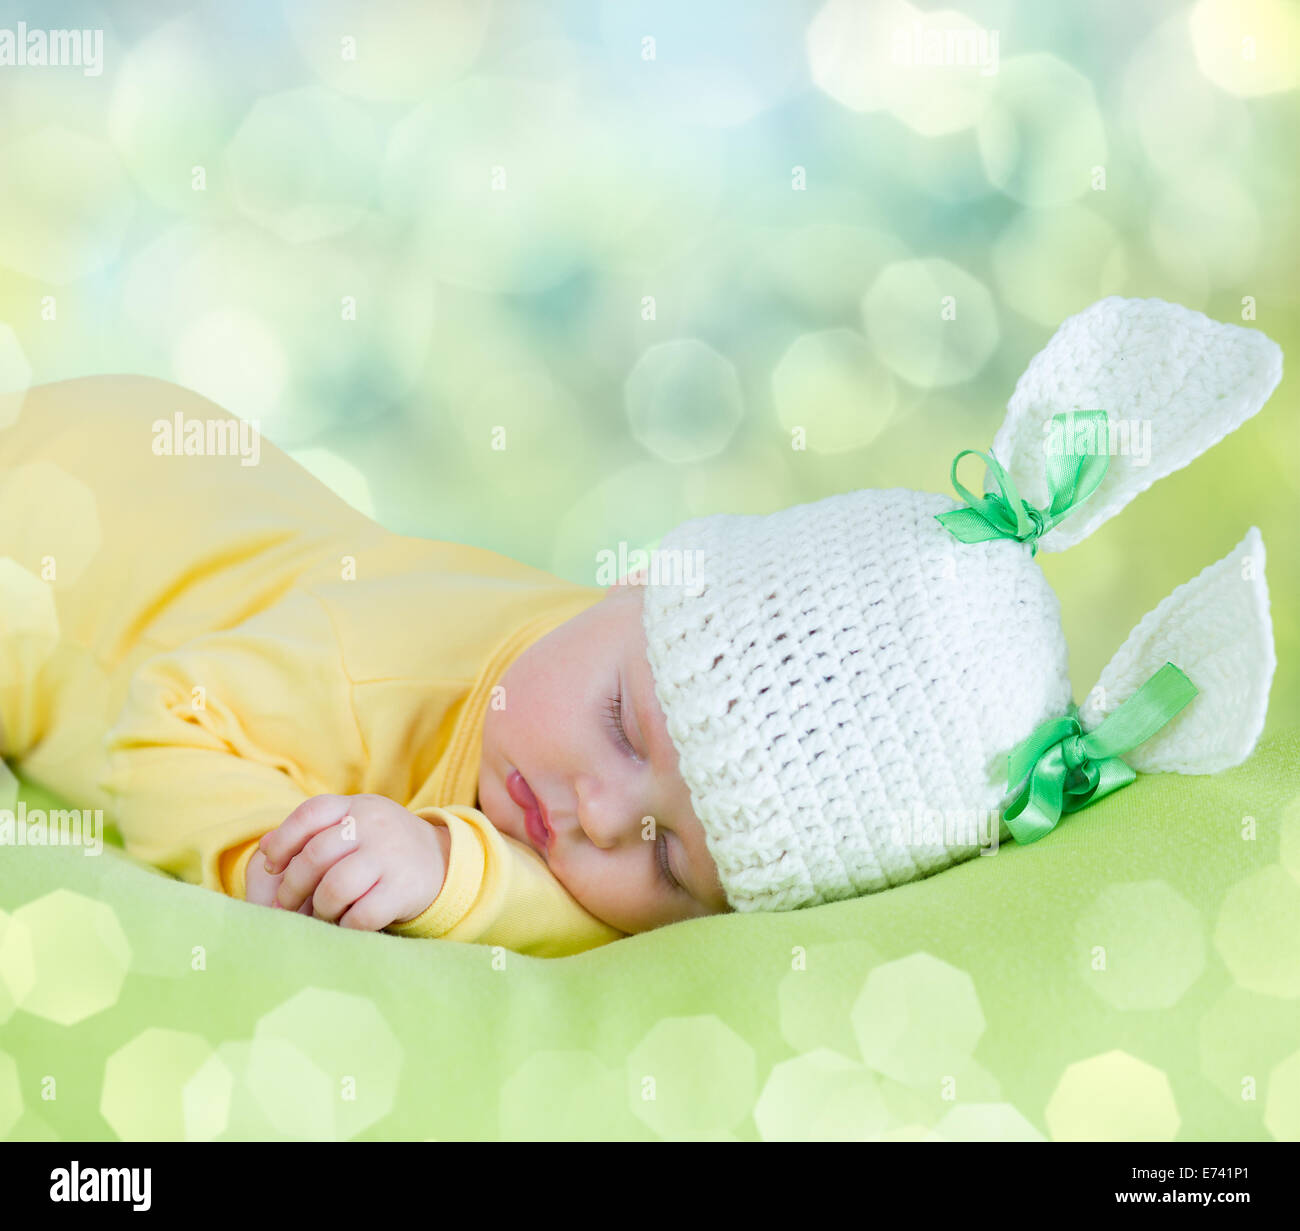 sleeping baby closeup portrait in hare or rabbit hat copyspace Stock Photo